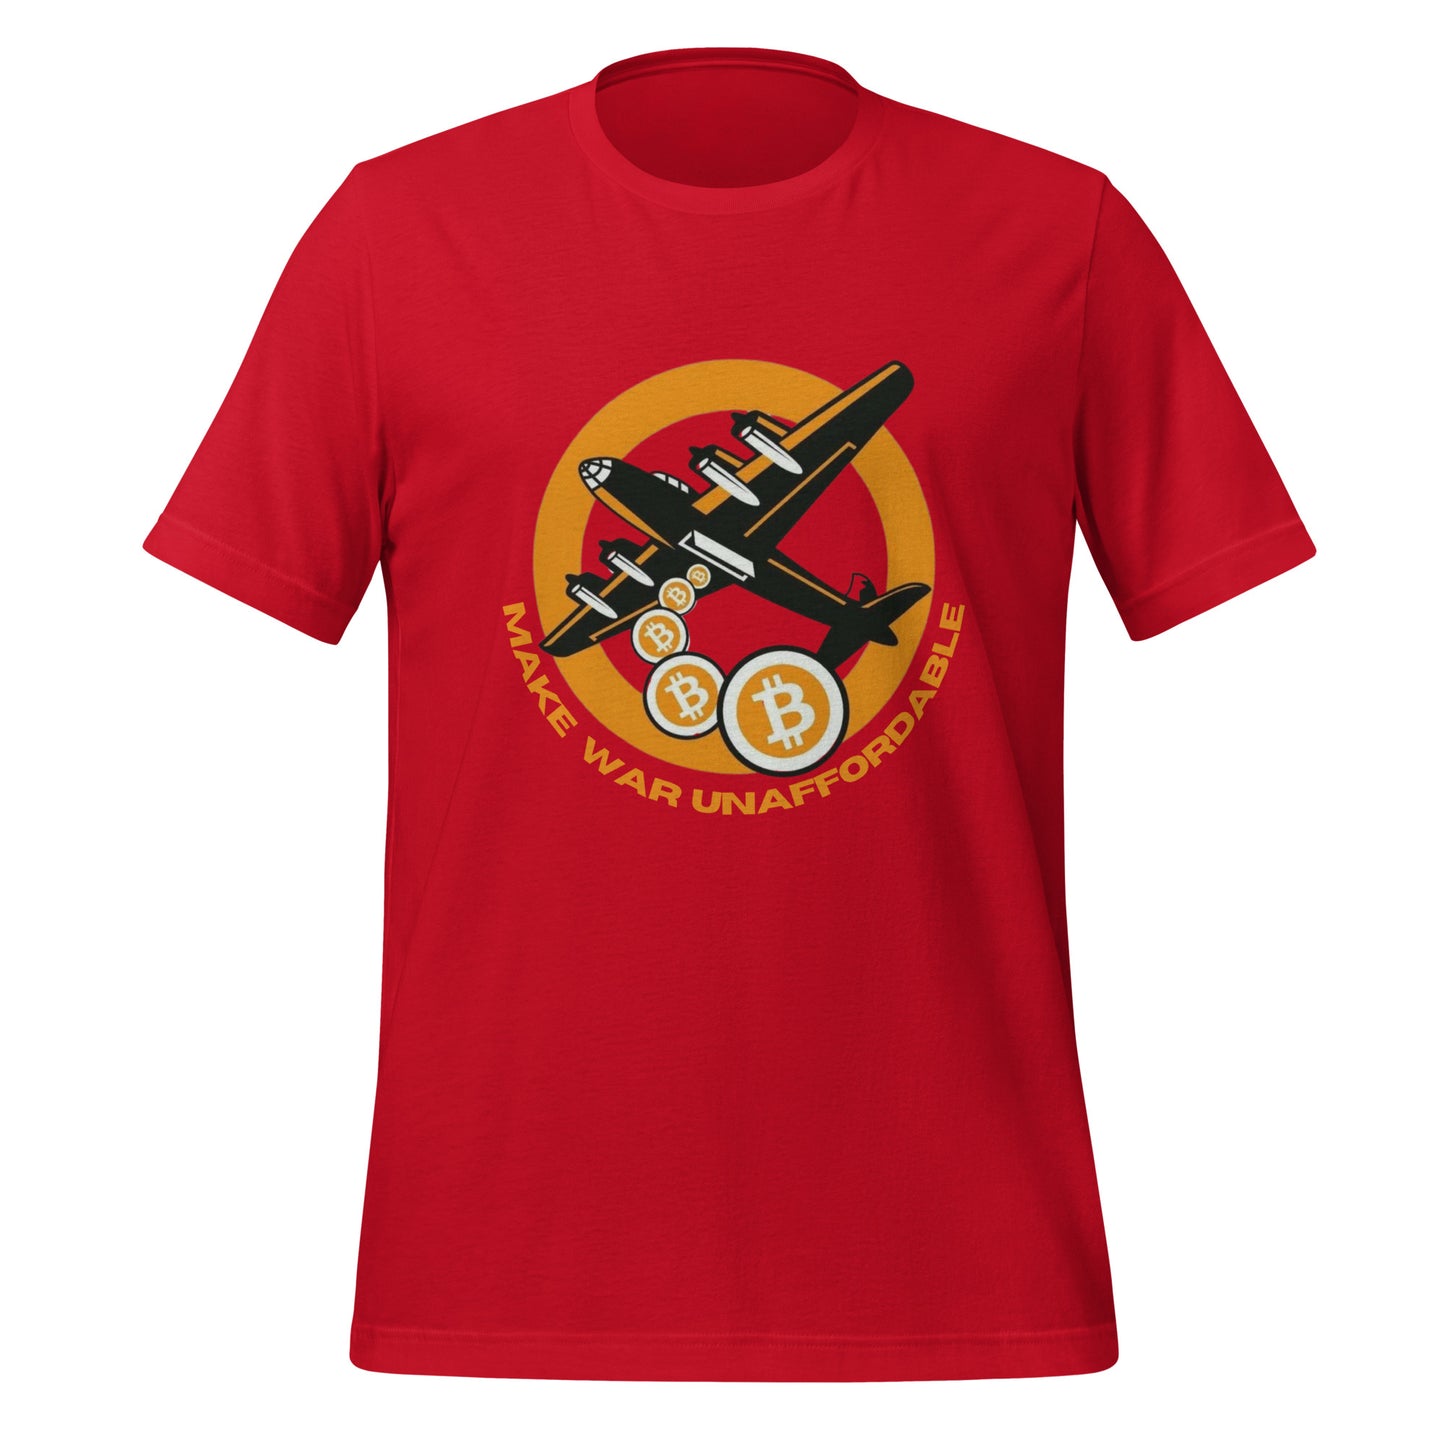 Make War Unaffordable Unisex t-shirt